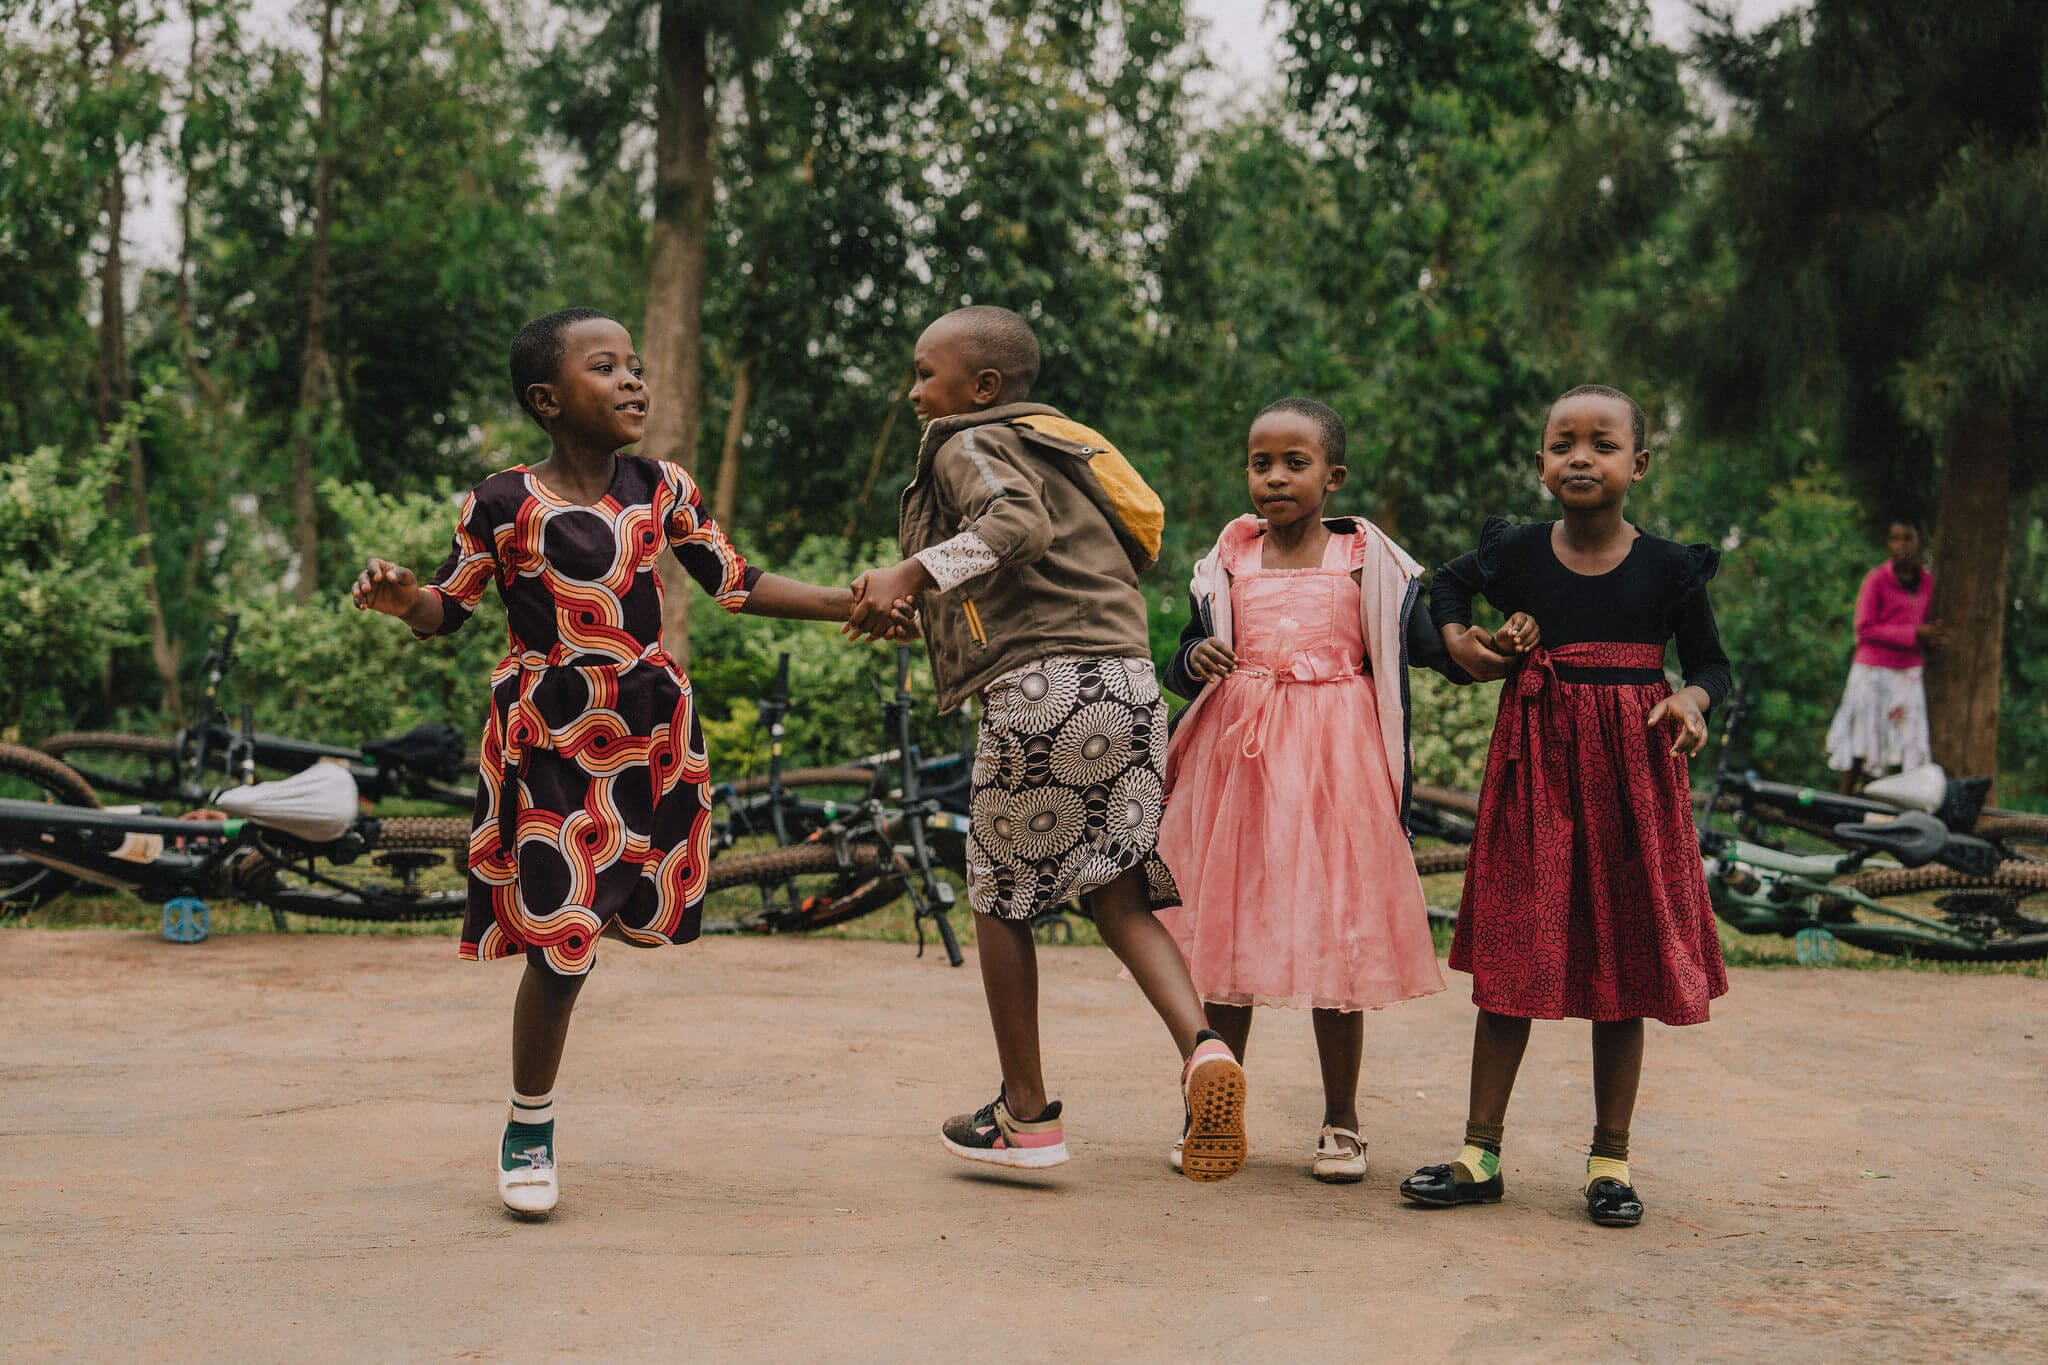 A group of children playing Rwanda